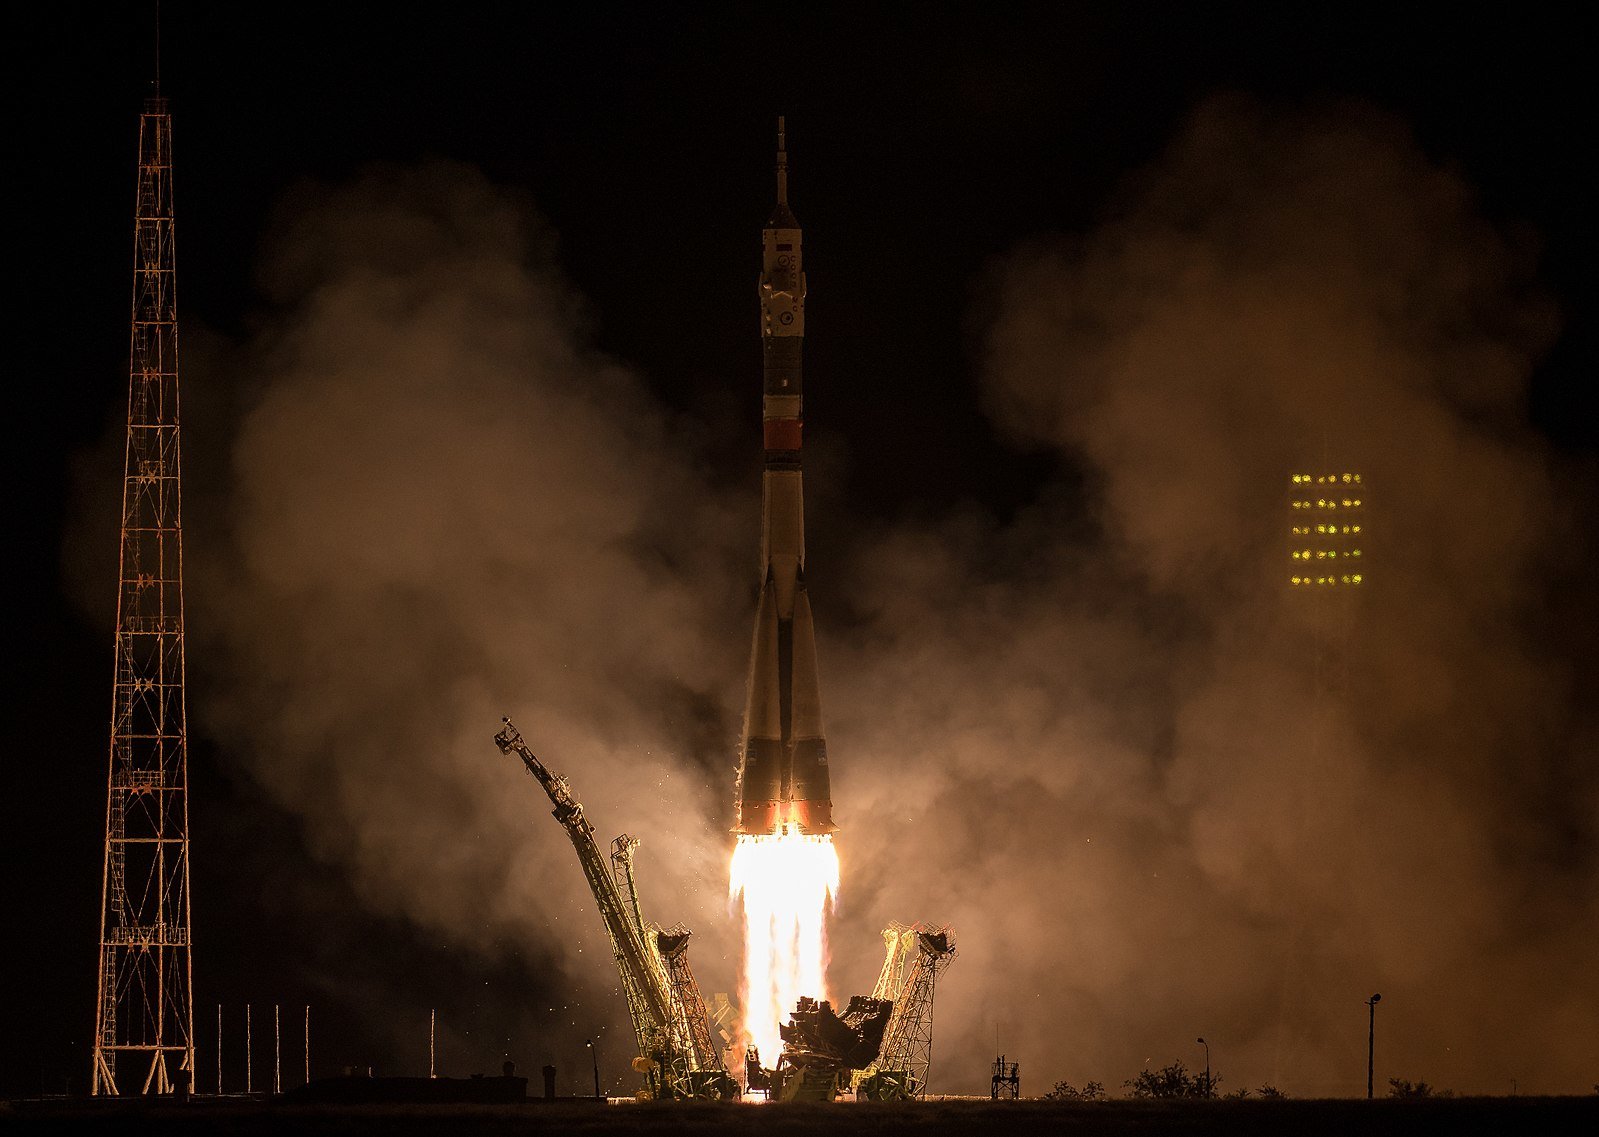 Russia tested anti-satellite missile, Soyuz spacecraft launch